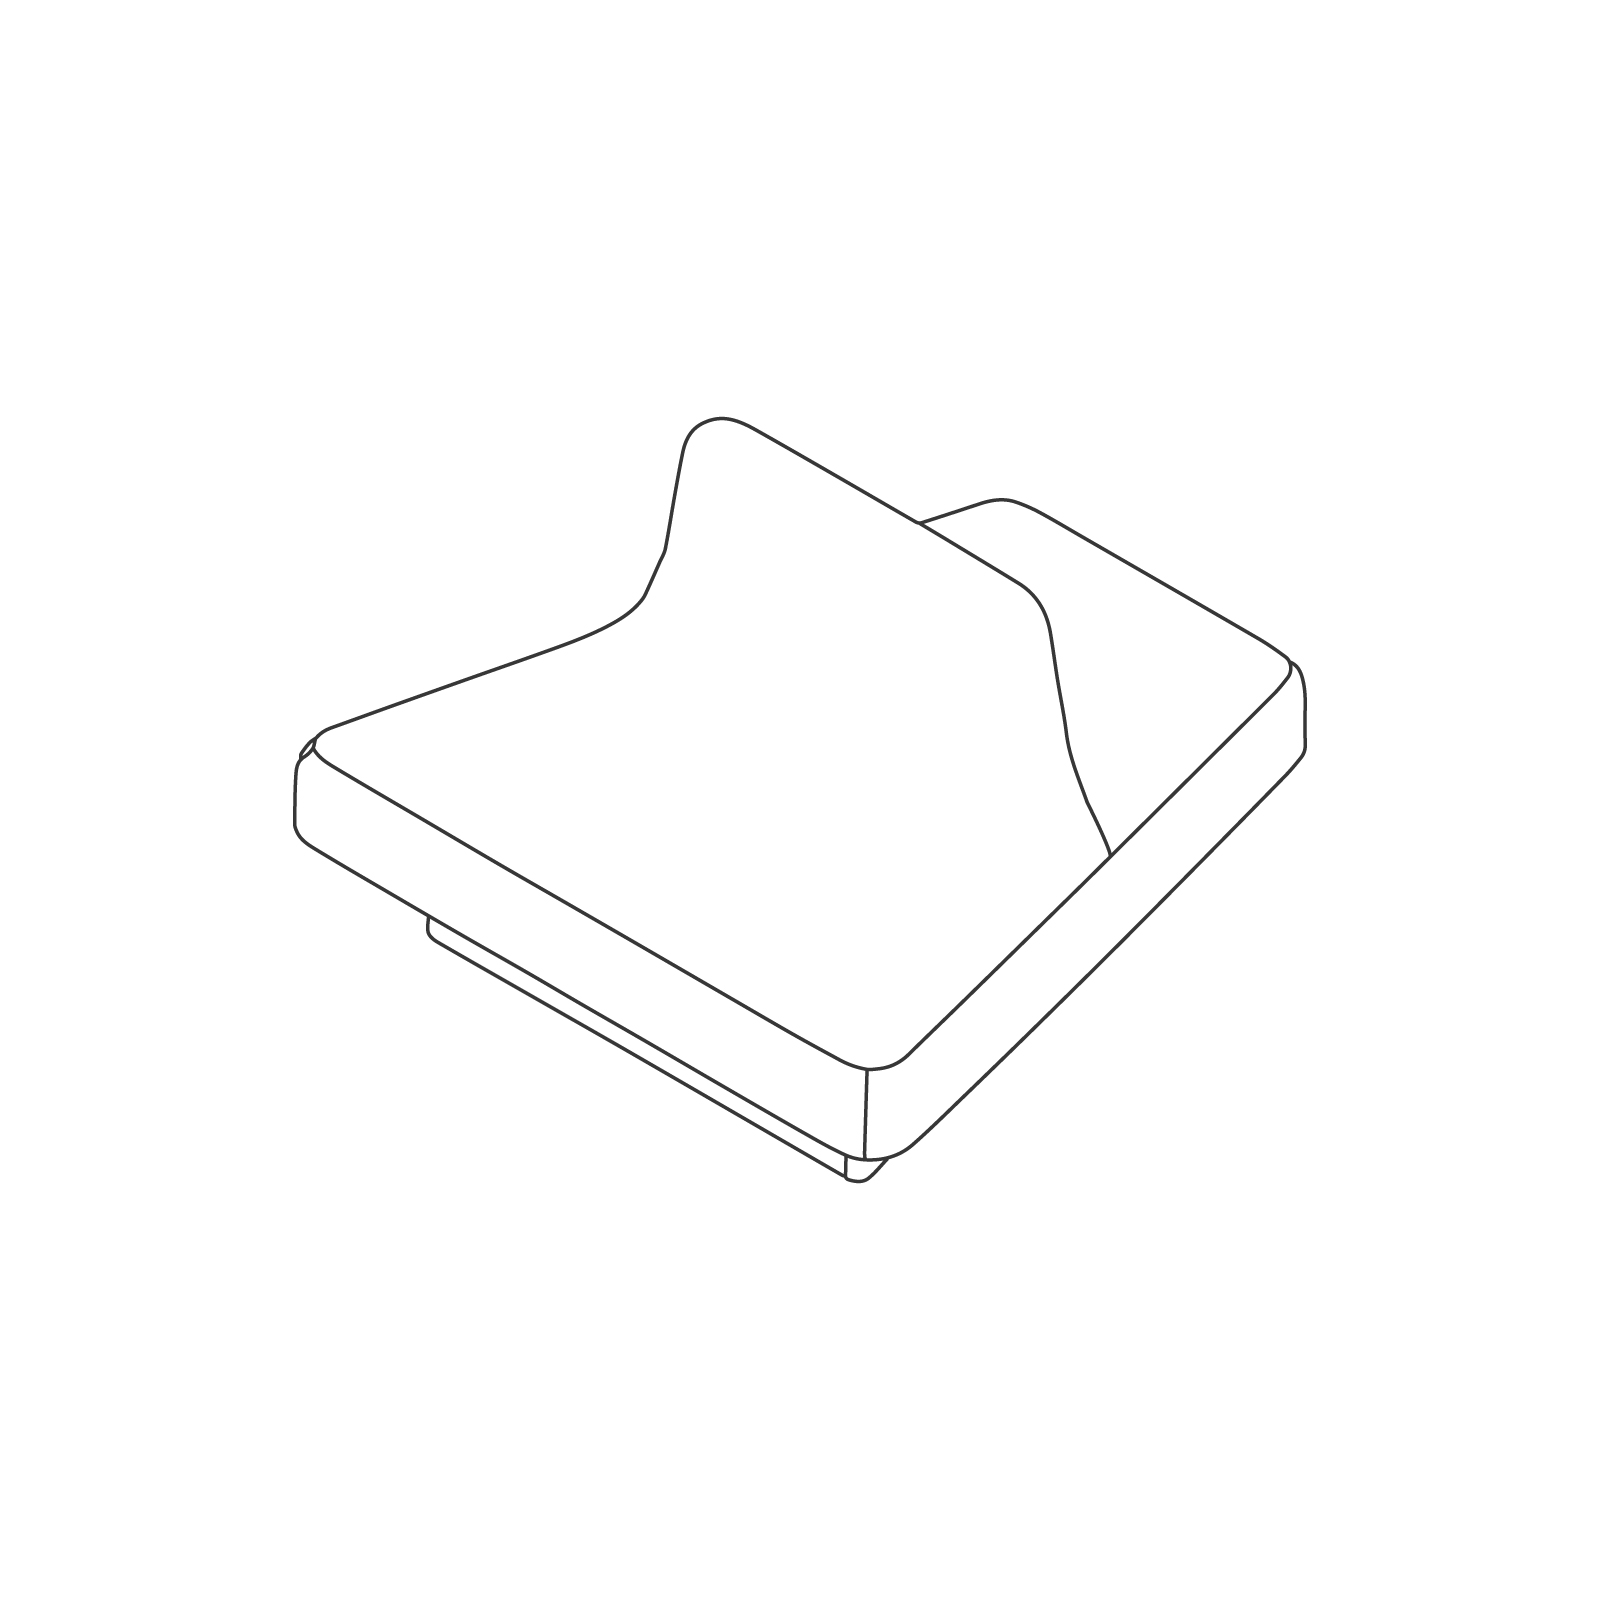 A line drawing - Rhyme Low Modular Seating–Single